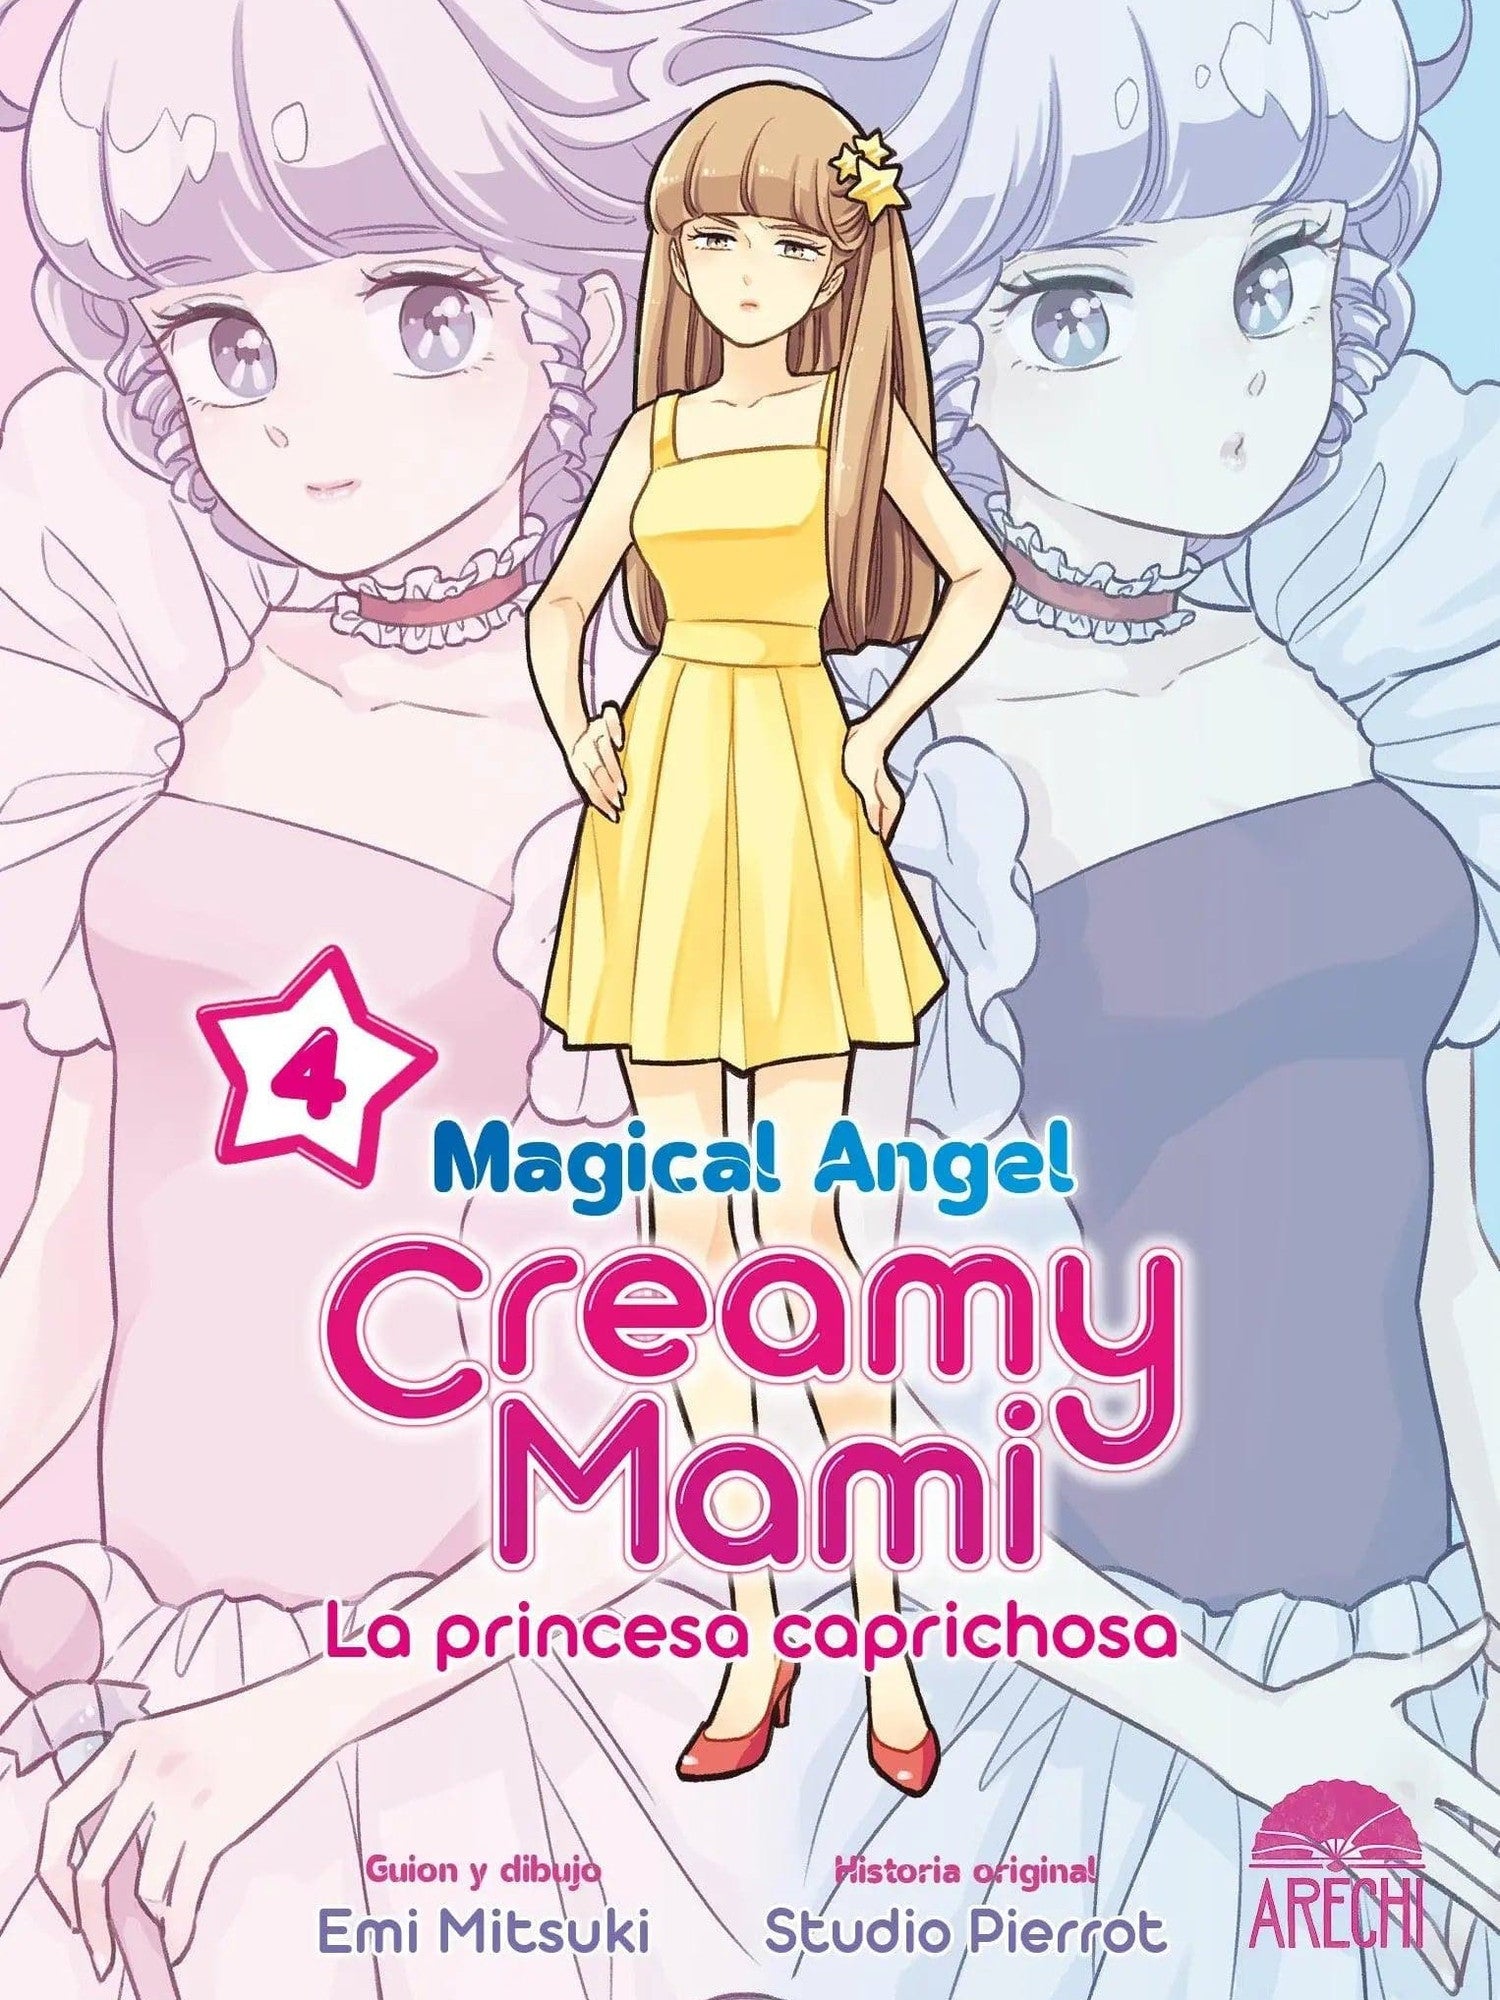 Magical Angel Creamy Mami: La Princesa Caprichosa 4 Arechi ENcuadrocomics